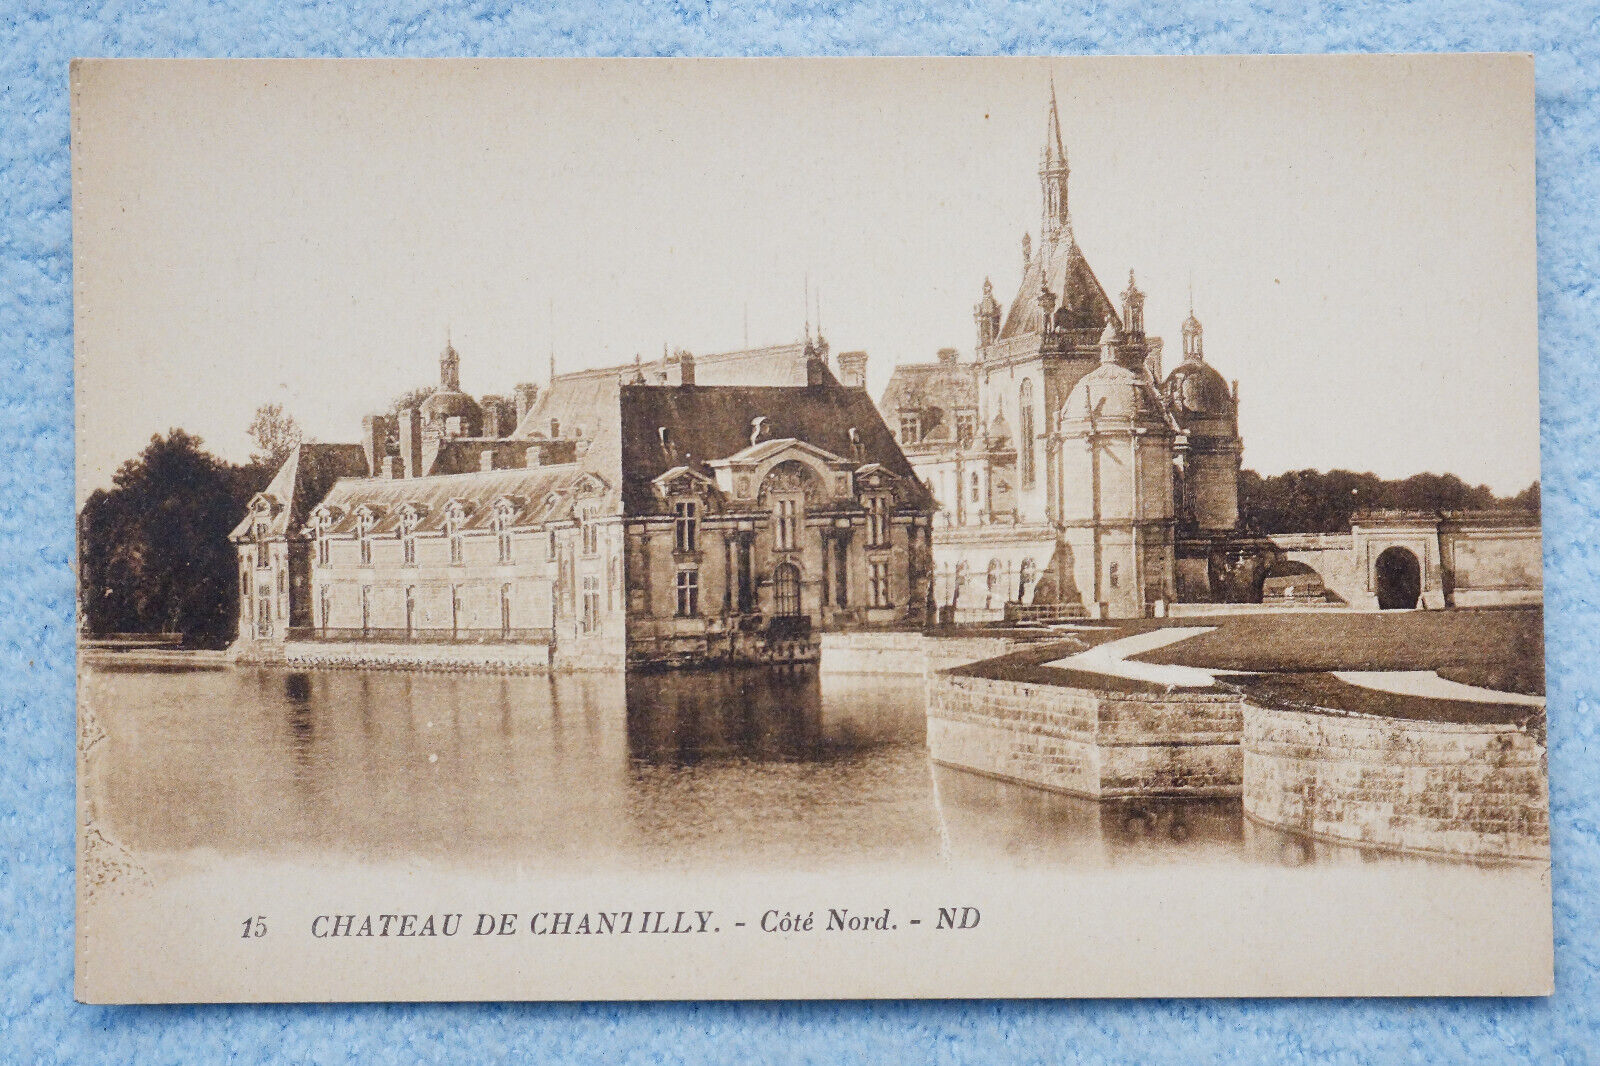 Chateau De Chantilly - Cote Nord - ND